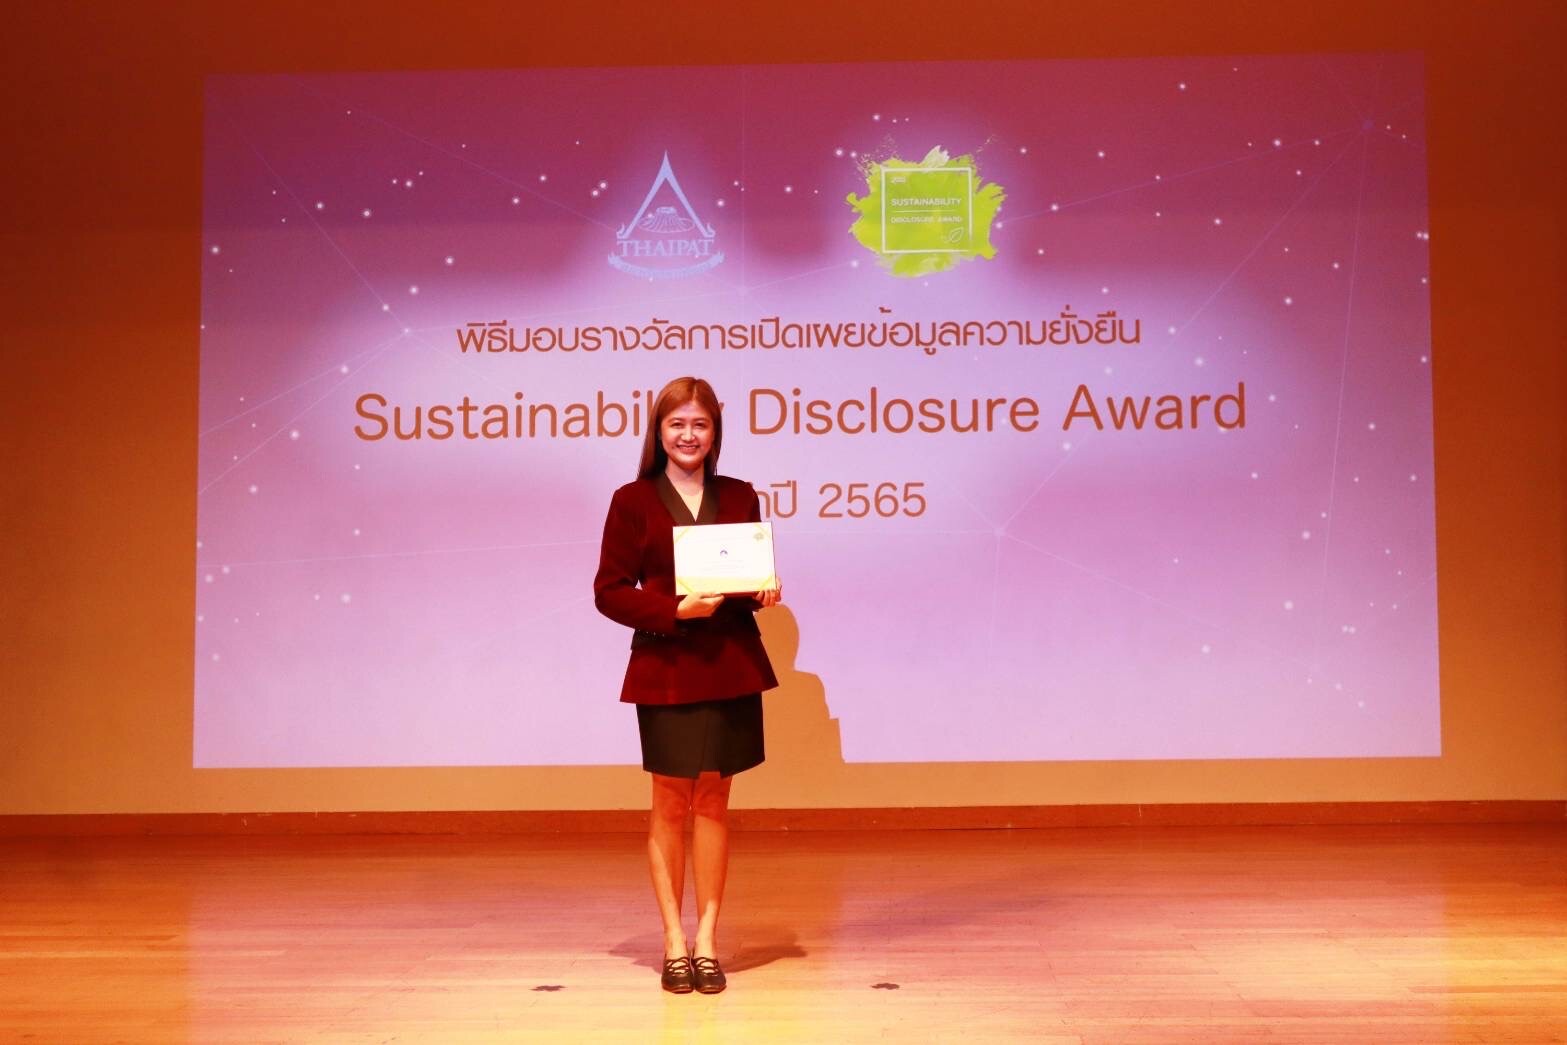 TMILL  รับรางวัลกิตติกรรมประกาศ "Sustainability Disclosure Acknowledgement" ต่อเนื่อง 3  ปีซ้อน